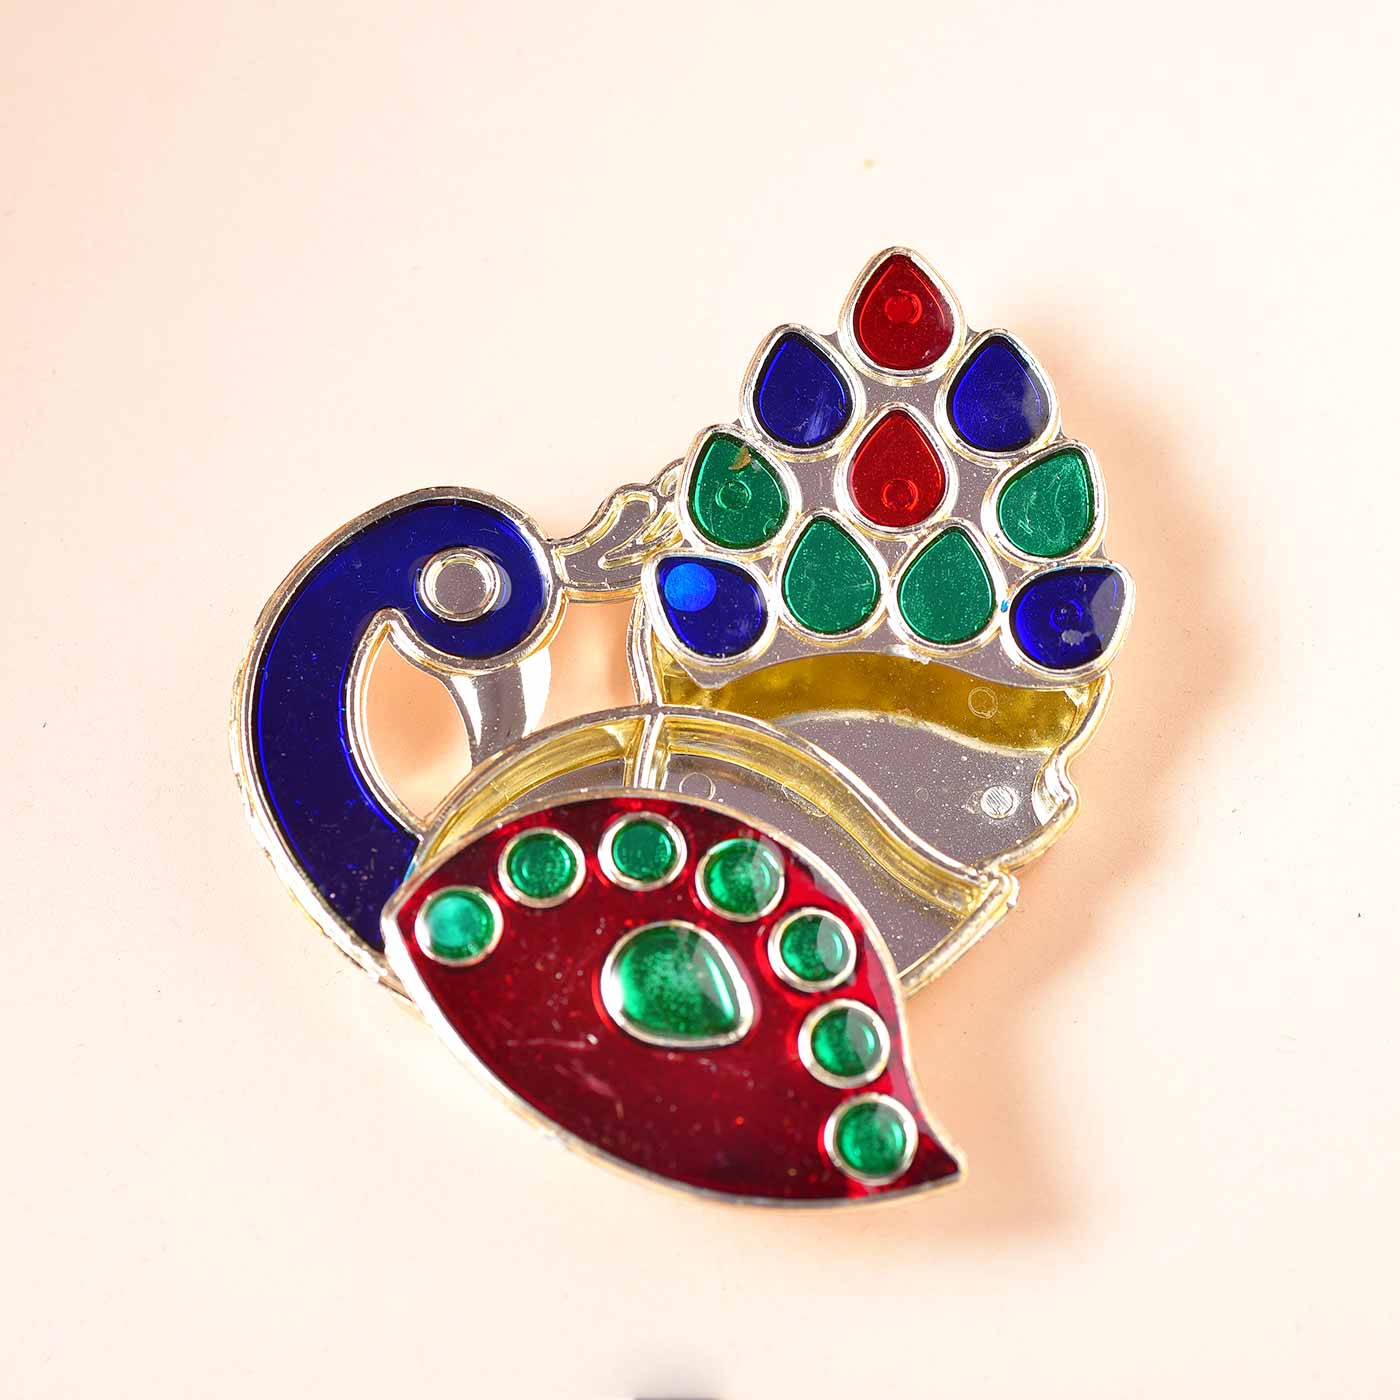 Peacock shaped Roli Chawal Palette Holder -12 Pcs Pack